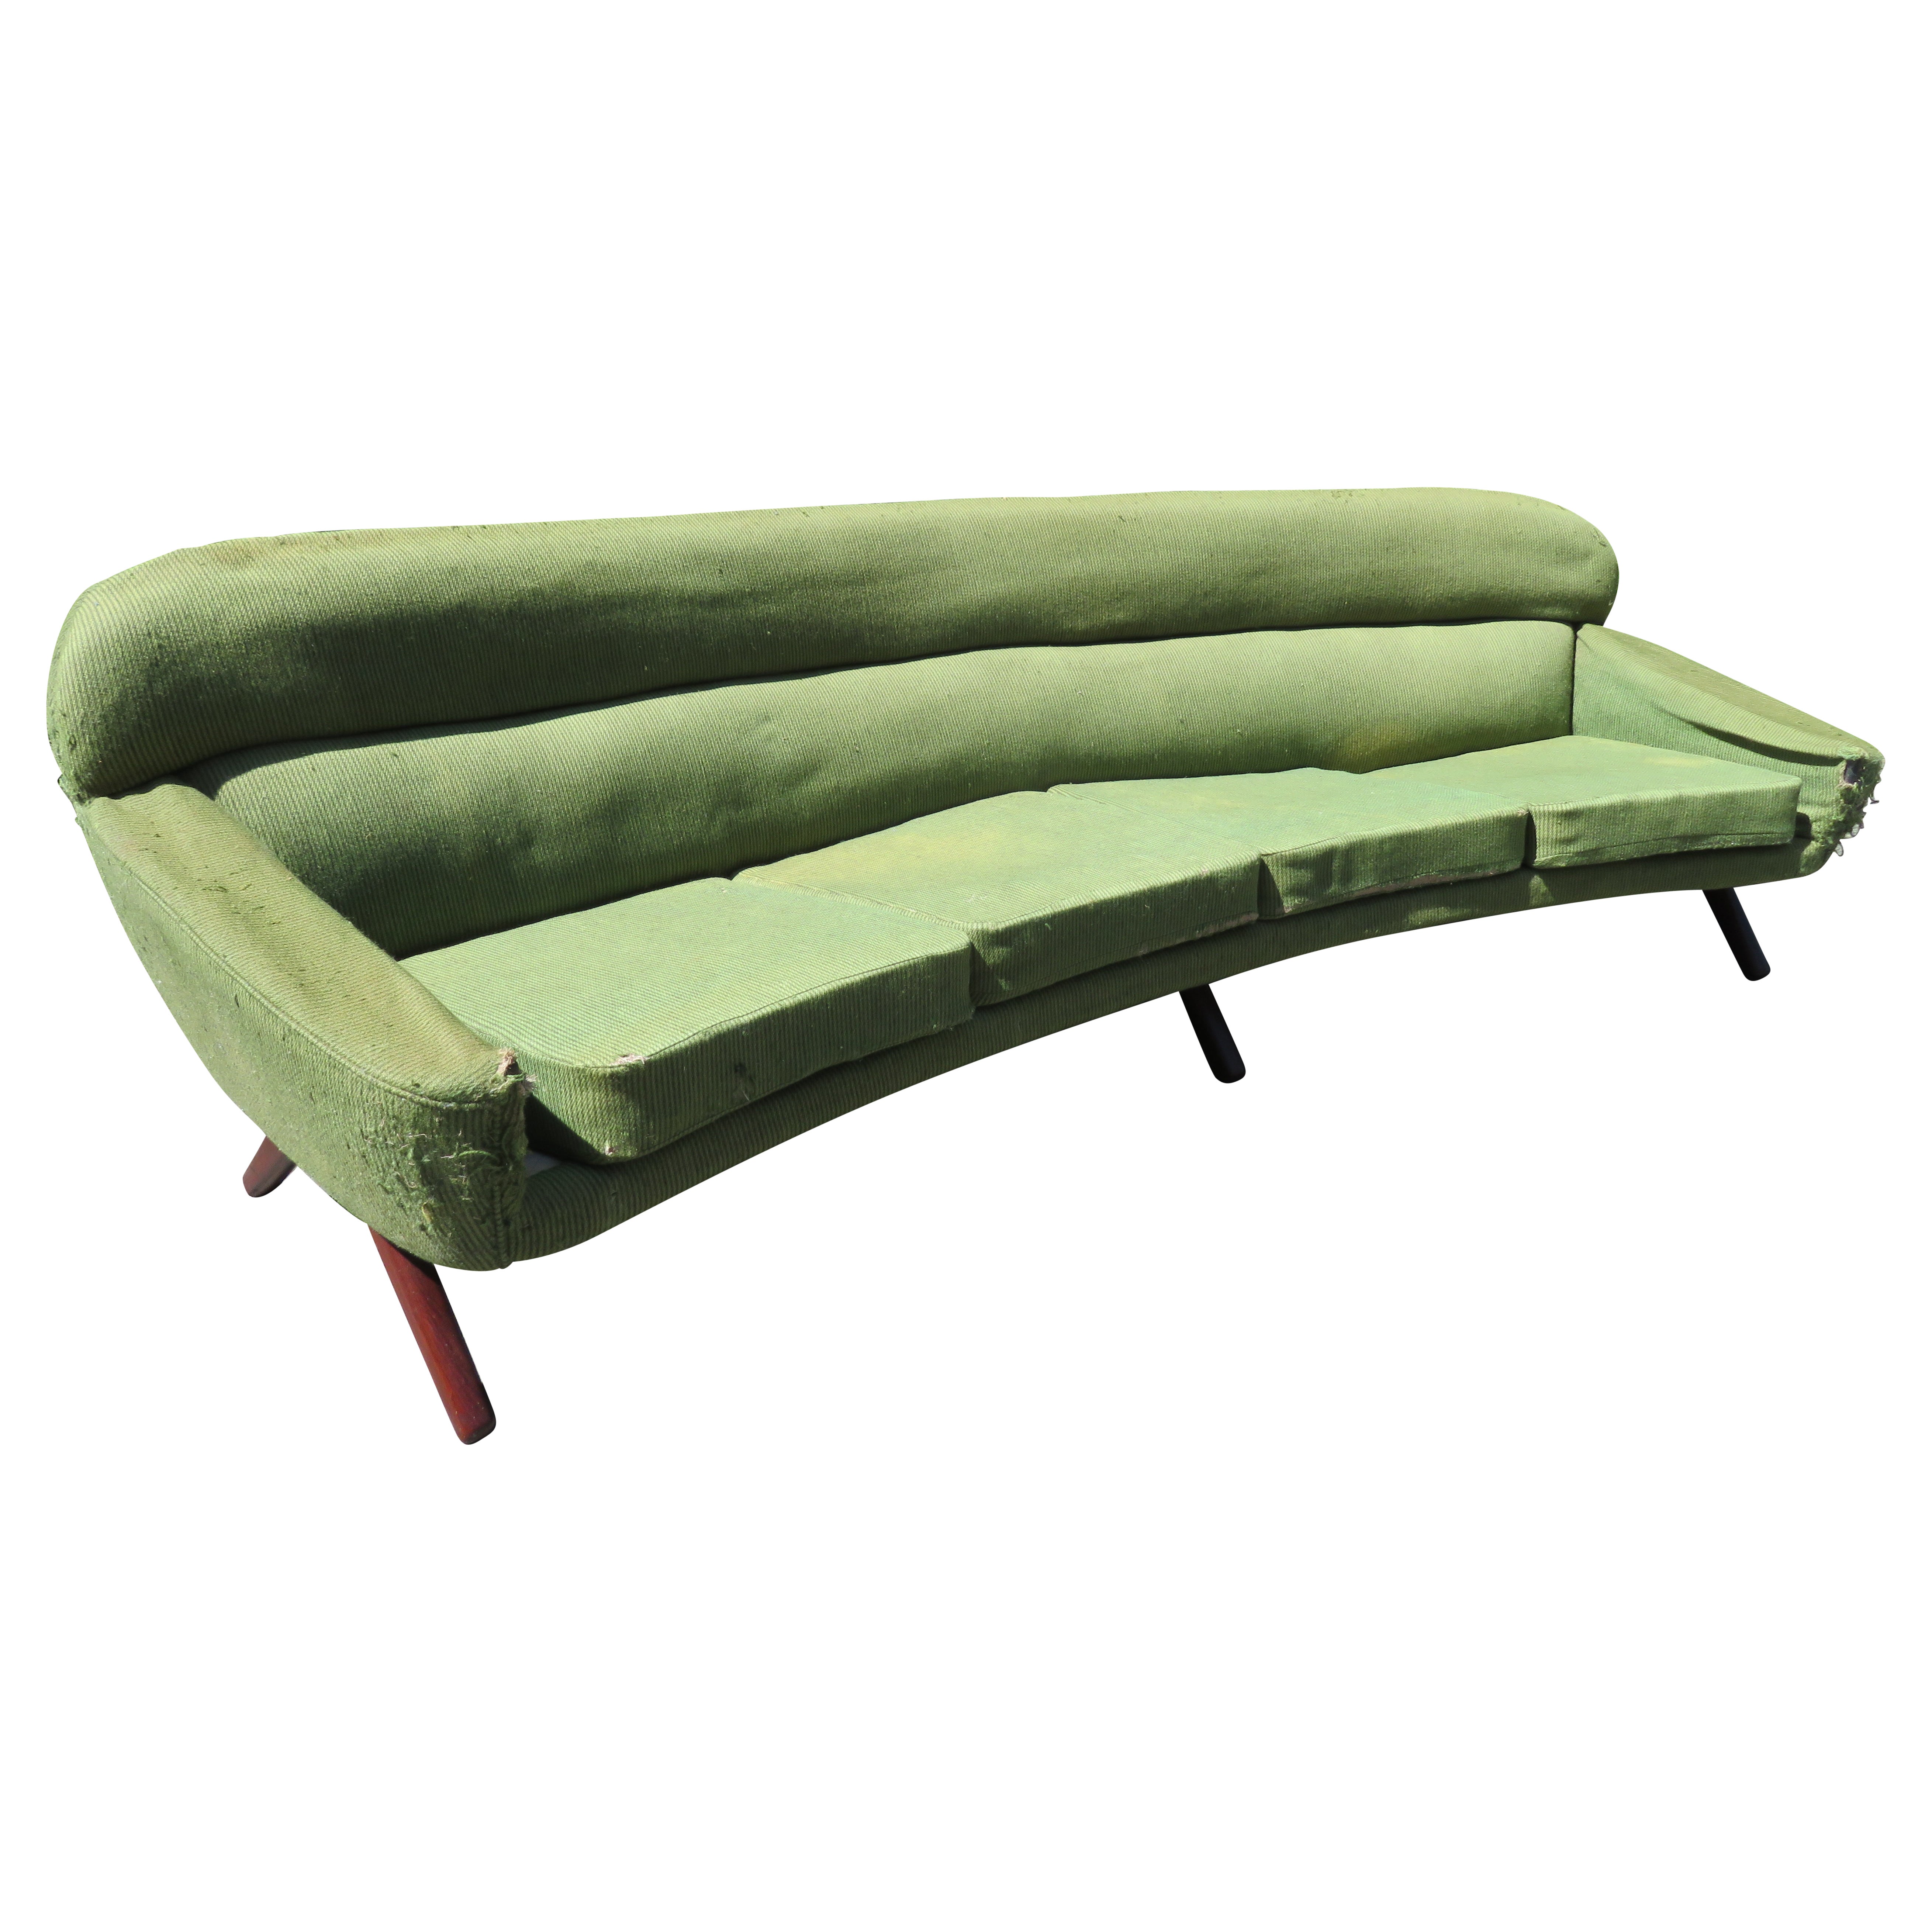 Outstanding Leif Hansen Style Curved Danish Modern Sofa Mid-Century